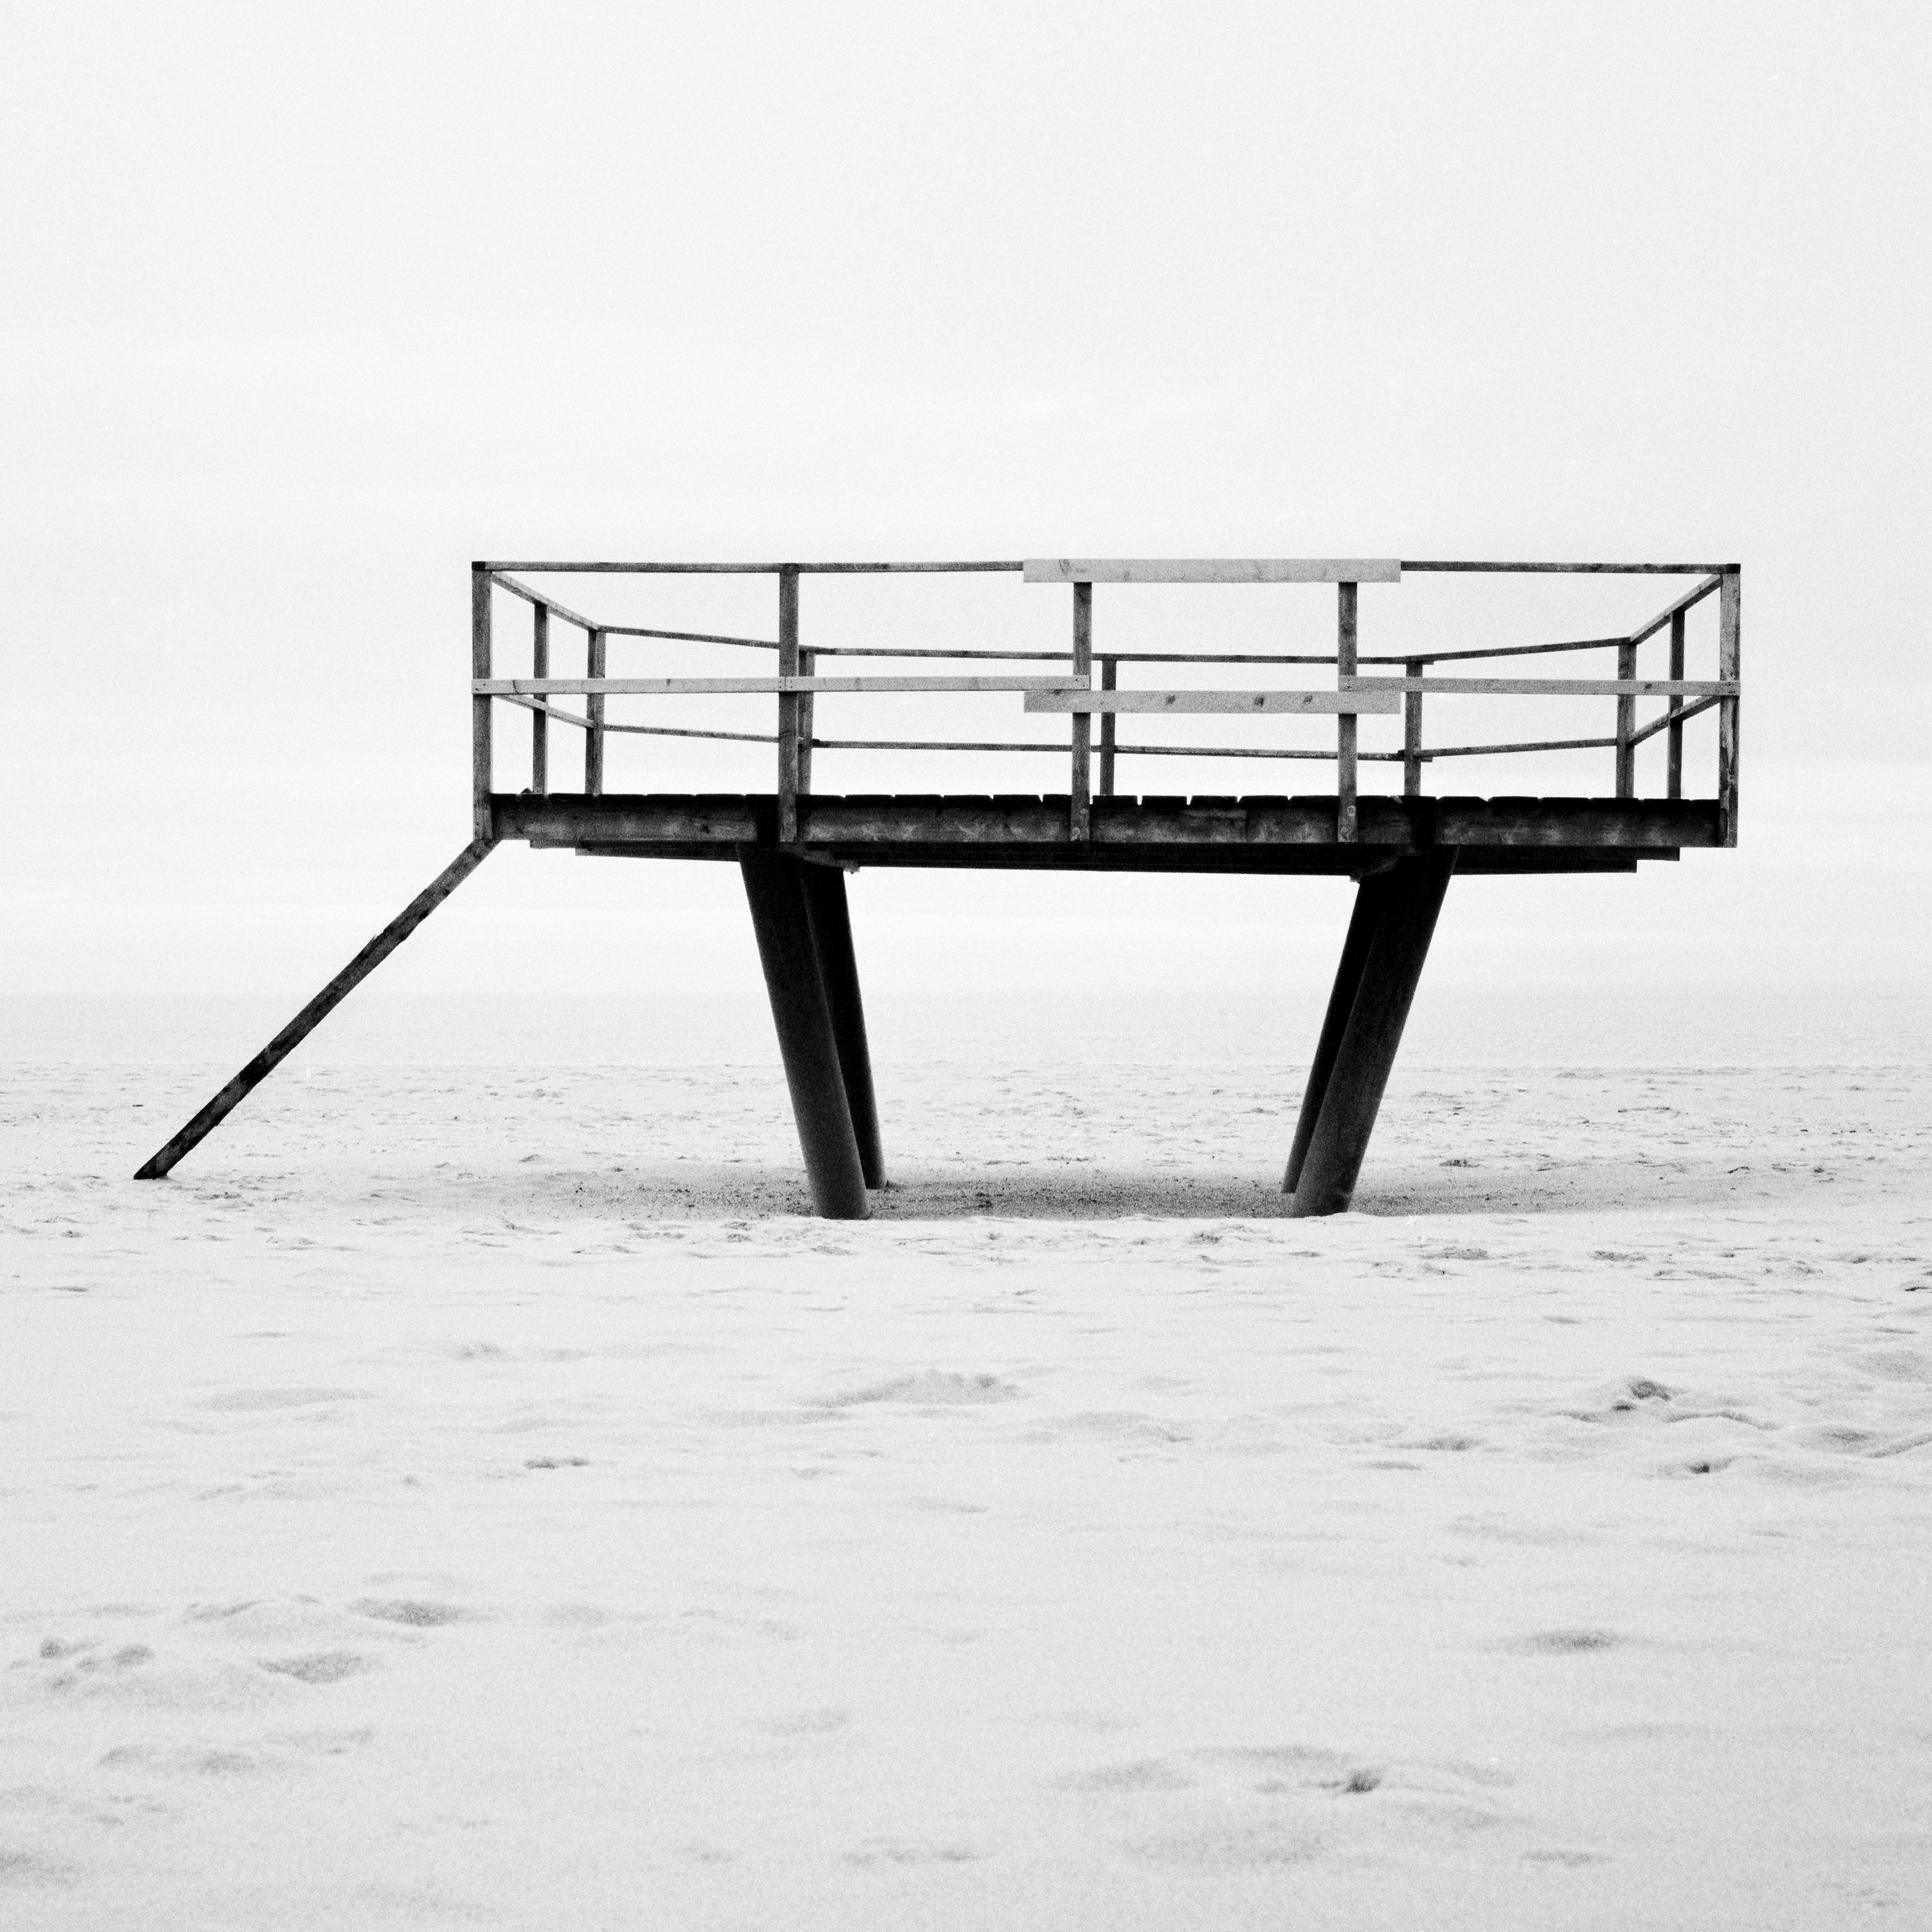 Dance Floor, lifeguard tower, black & white minimalist landscape art photography For Sale 1